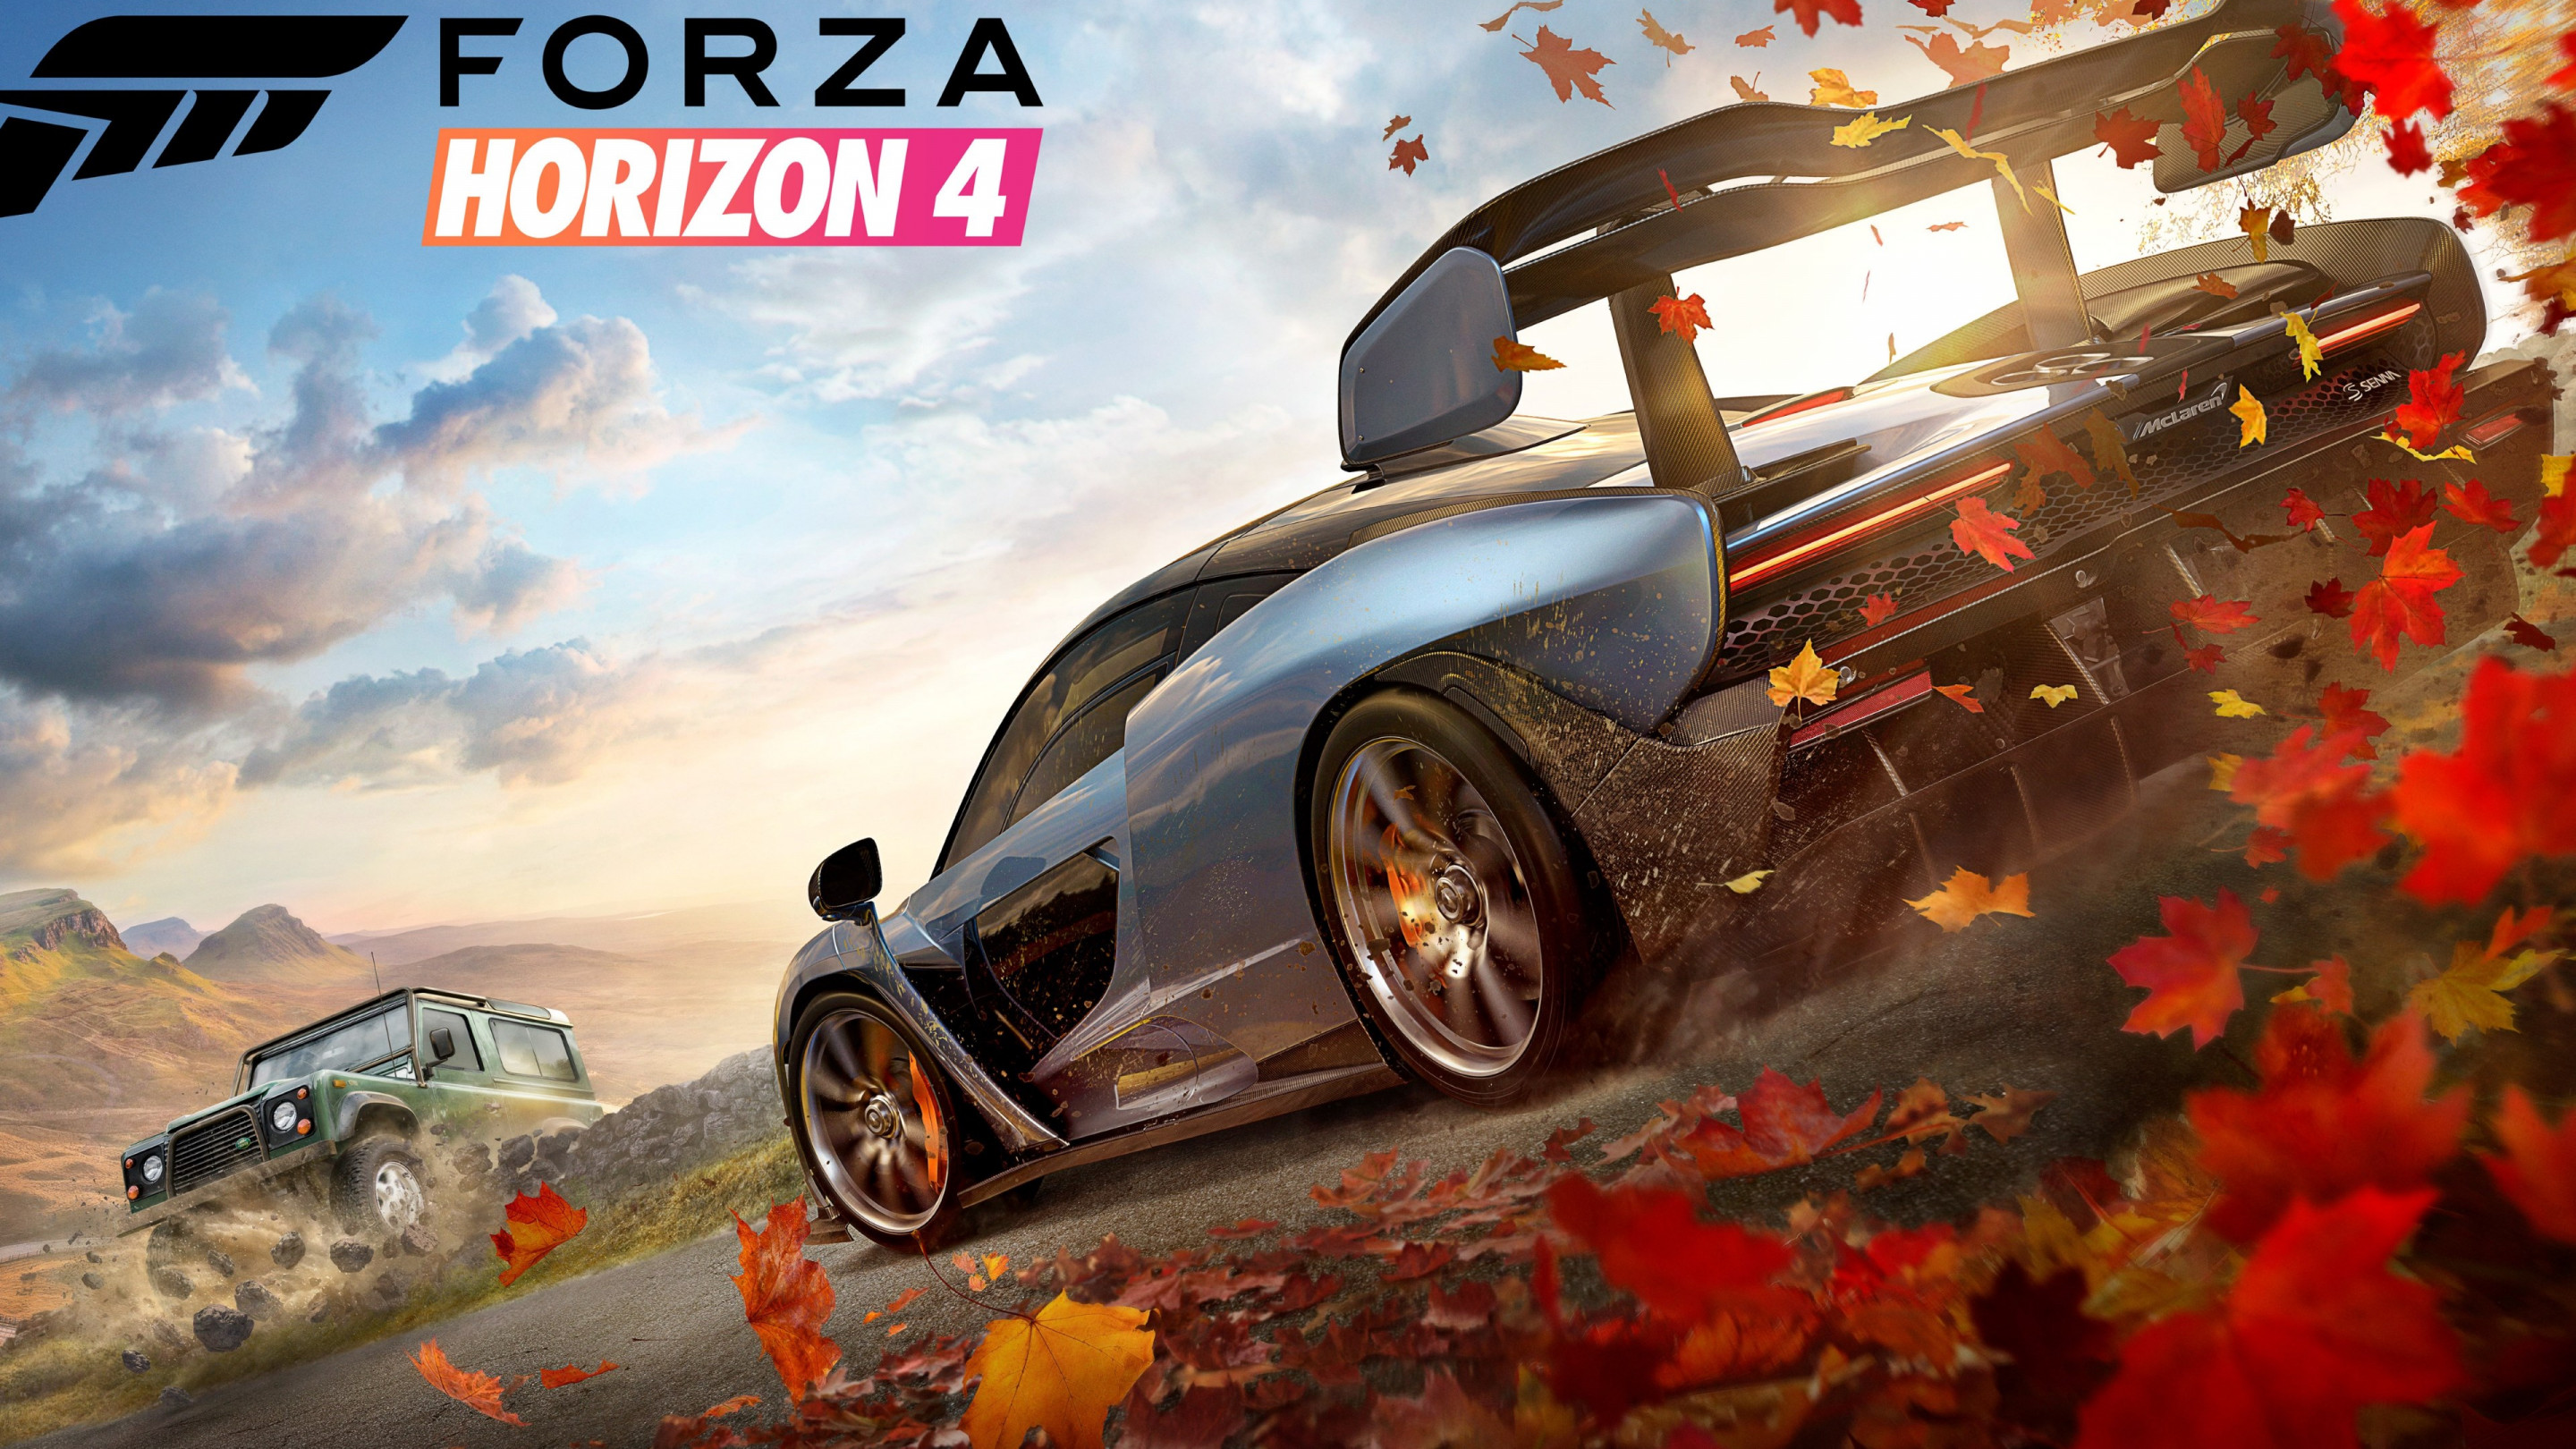 Forza Horizon 4 wallpaper 2880x1620